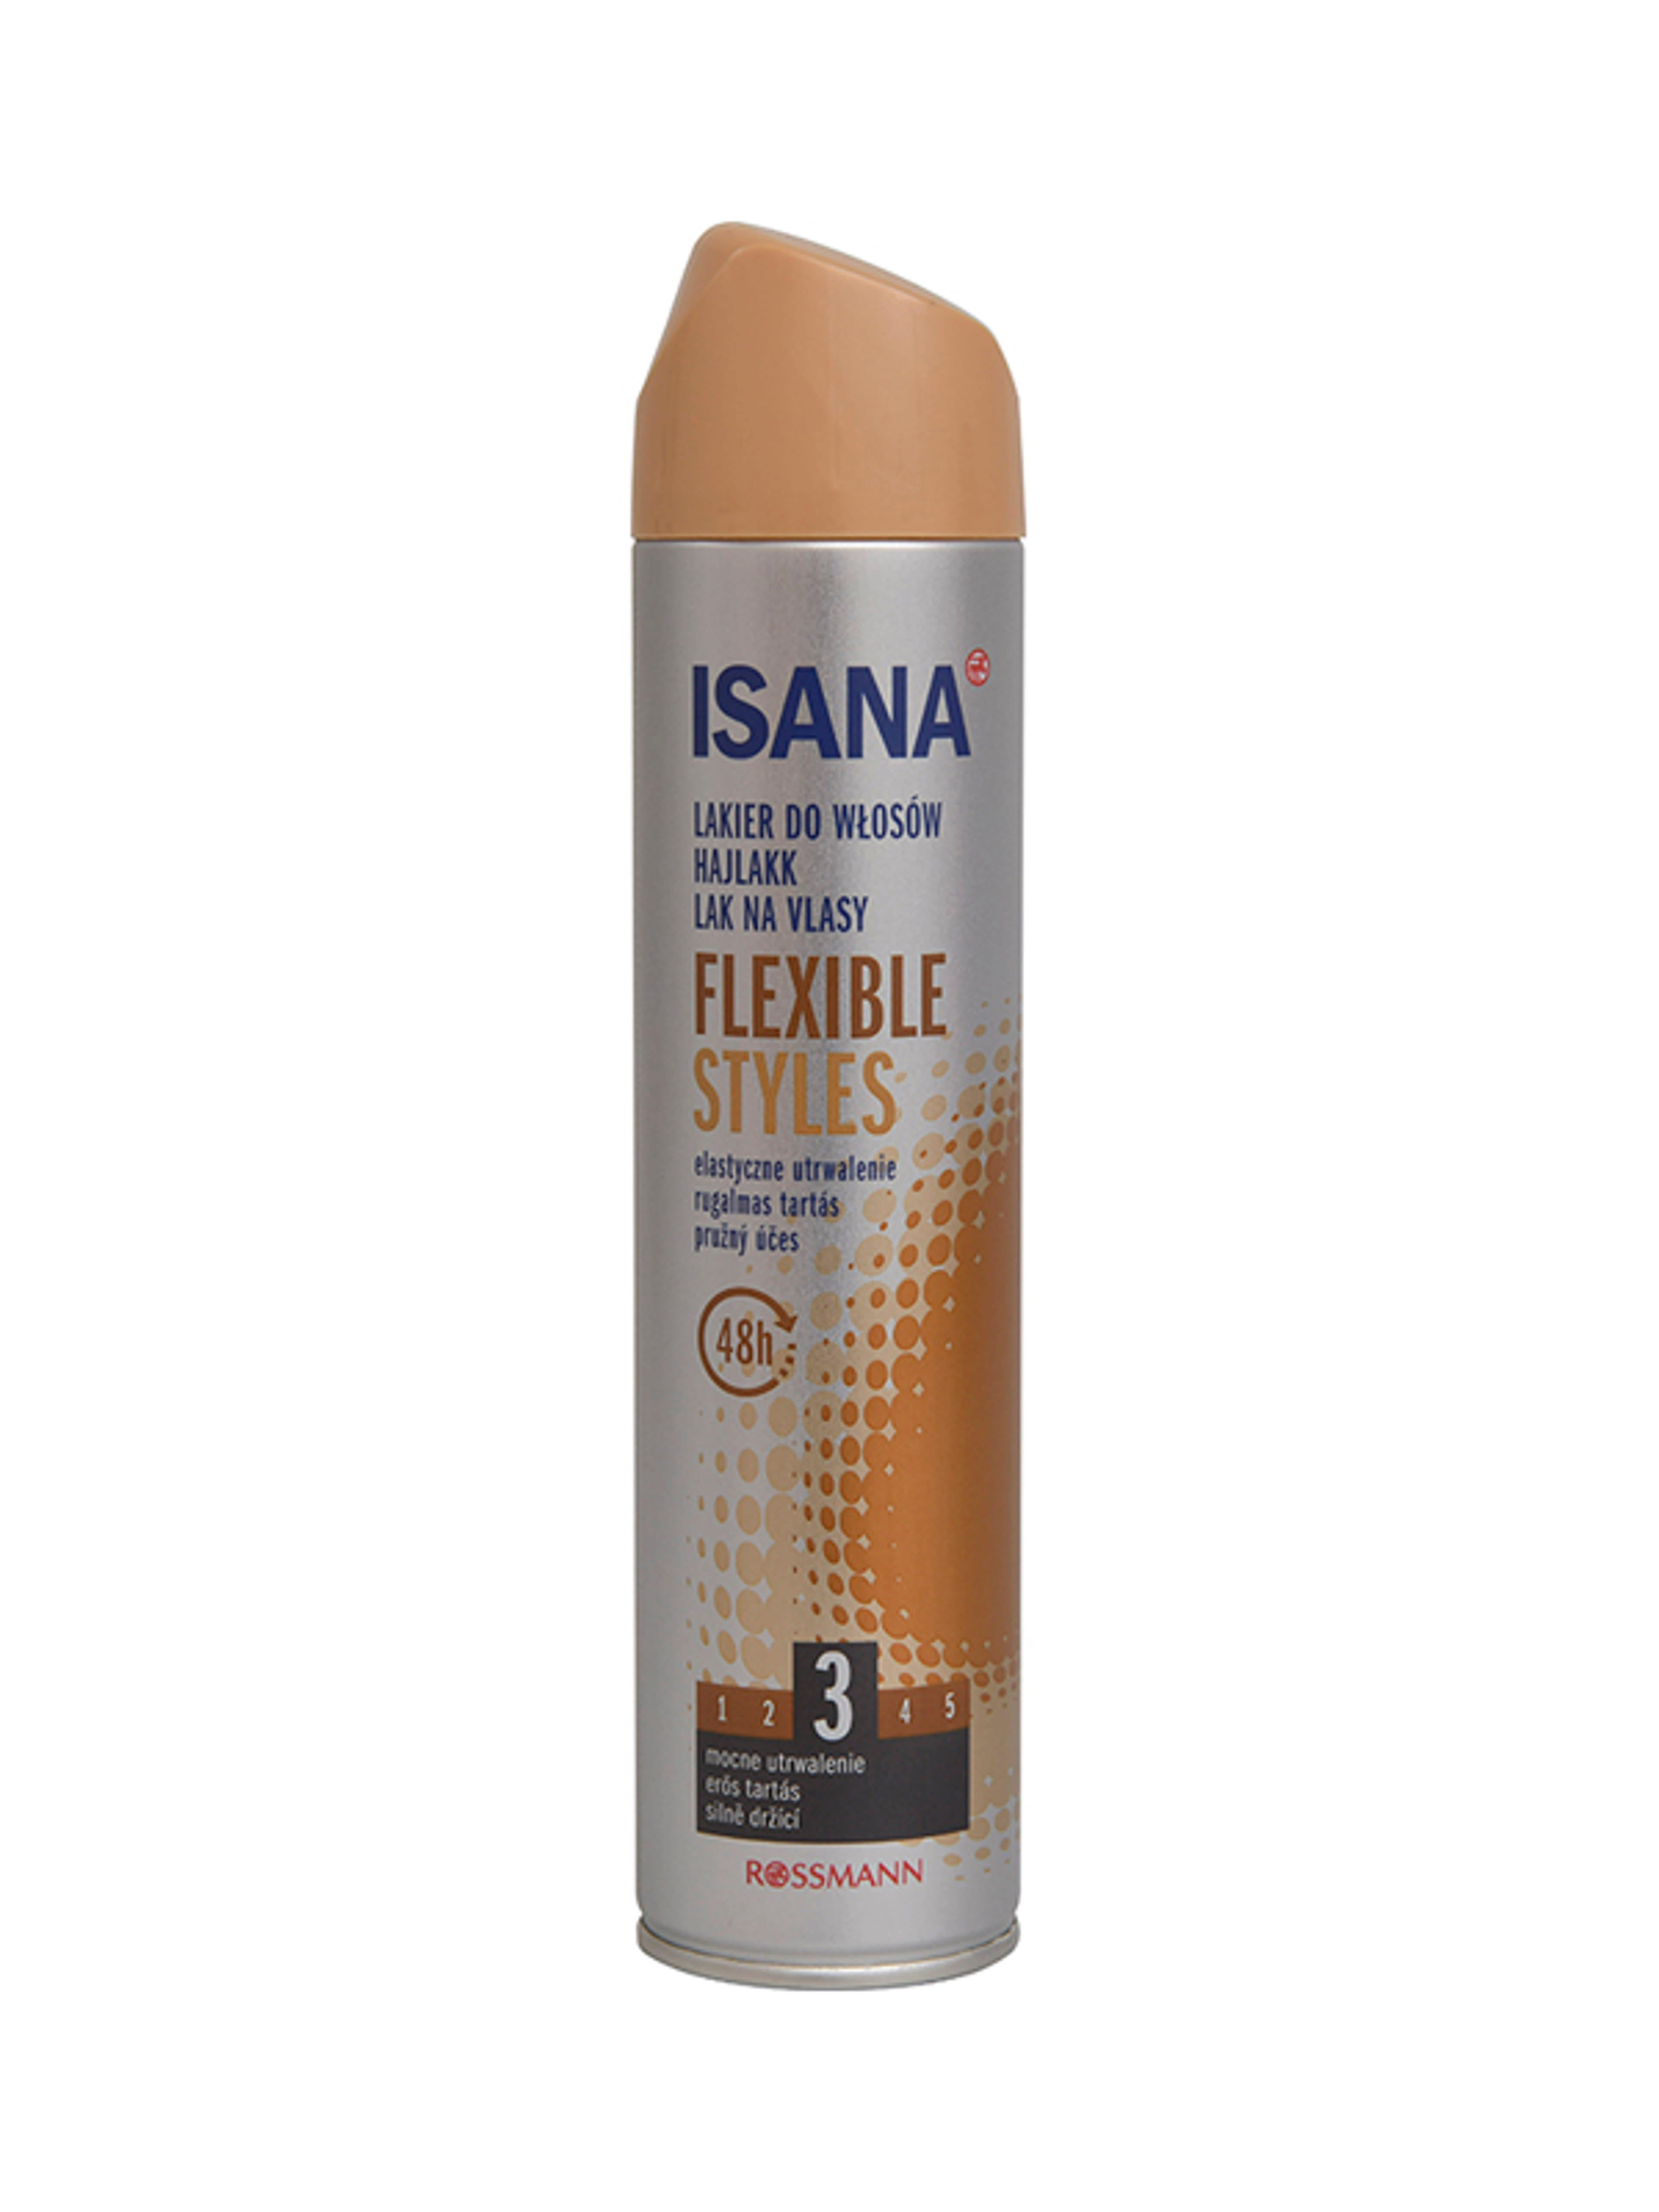 Isana Hair Flexible hajlakk - 250 ml-1